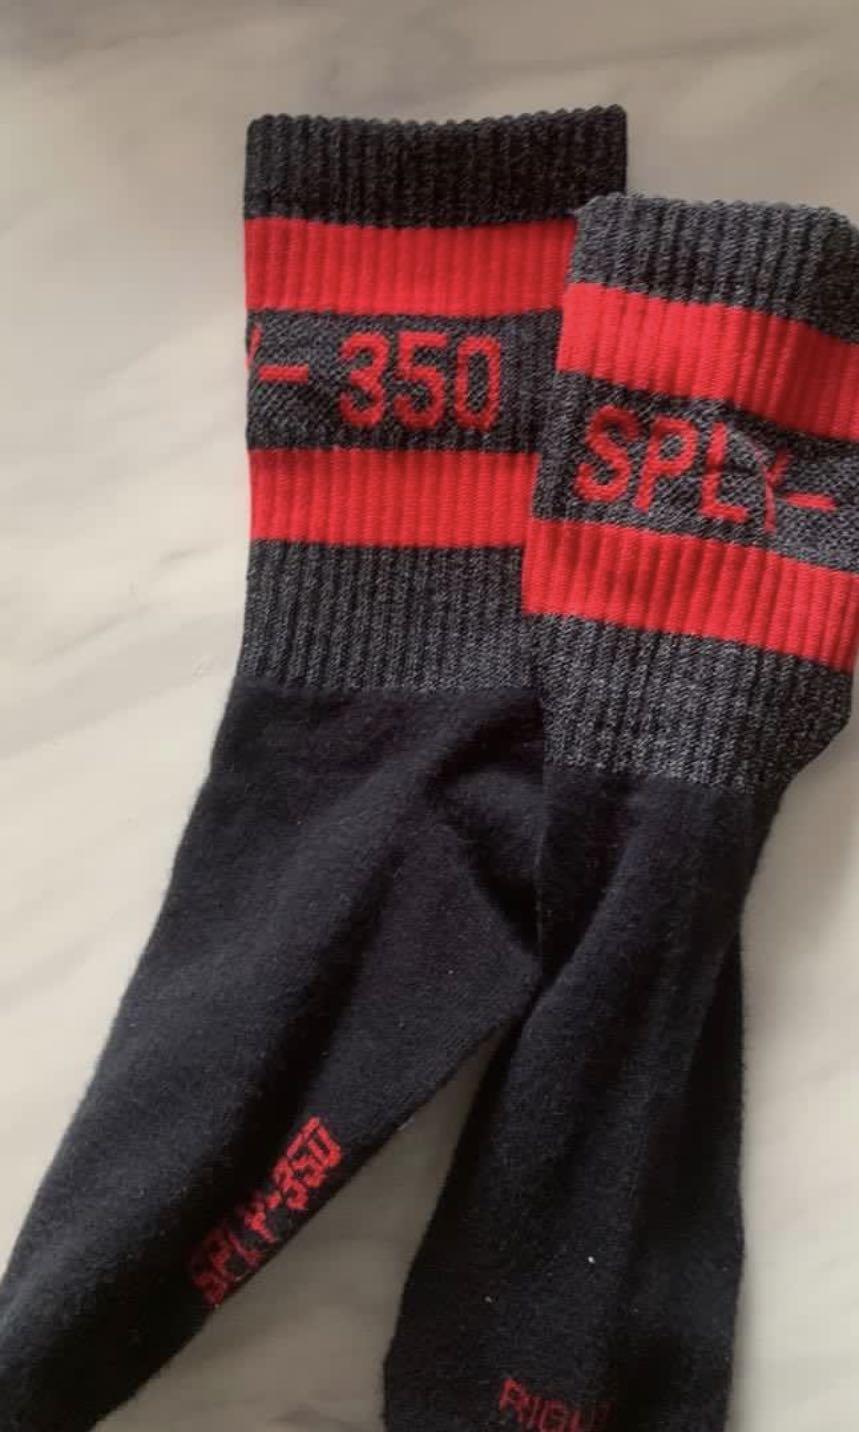 socks that go with yeezys